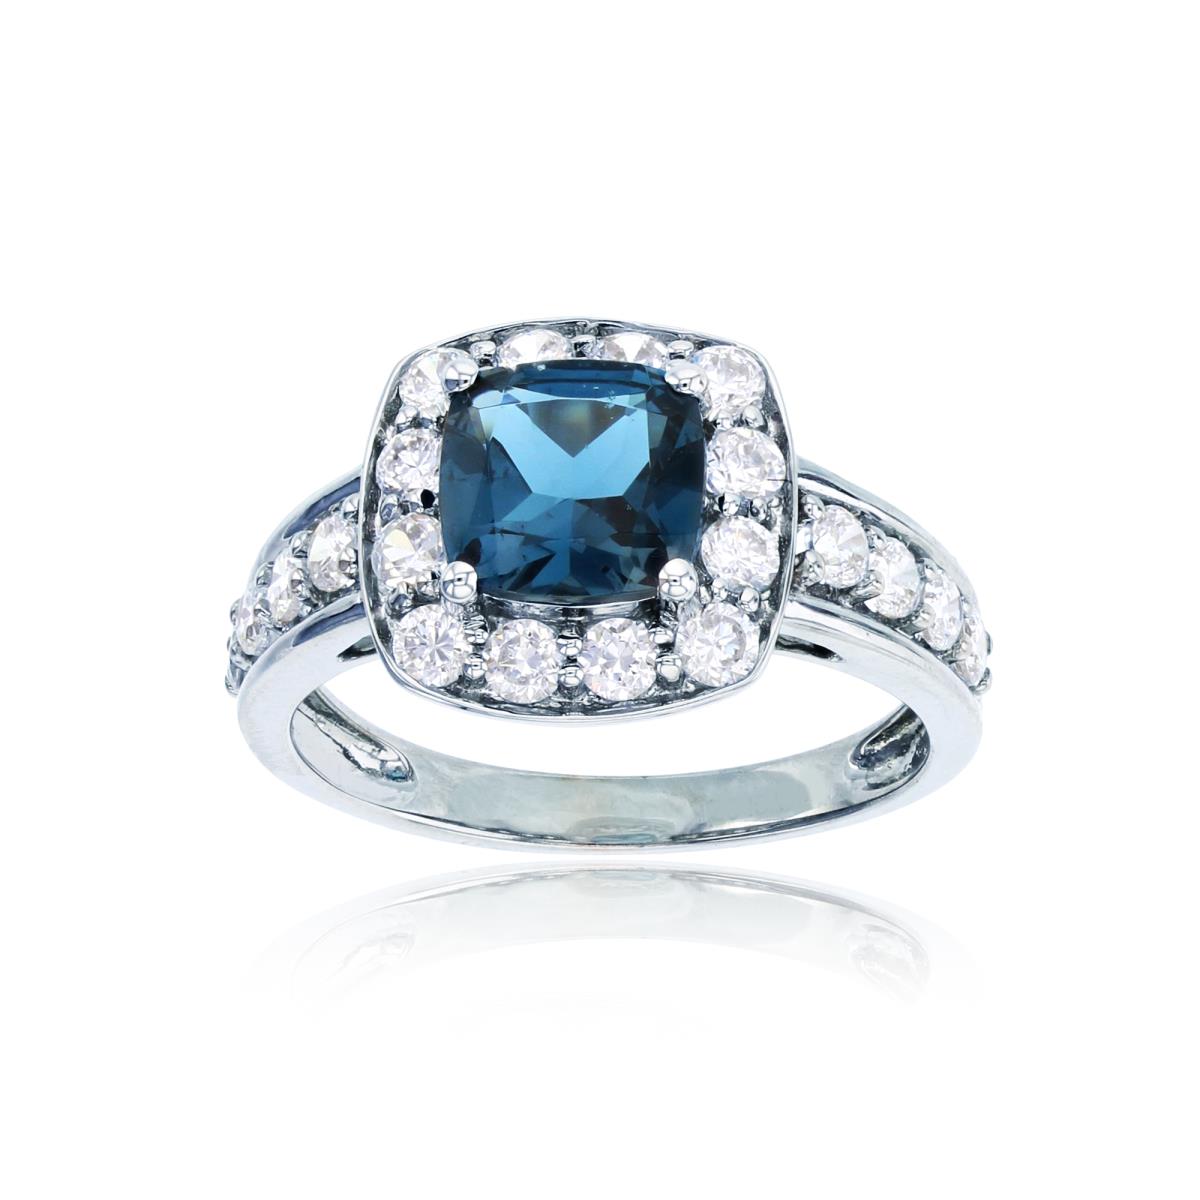 14K White Gold 7mm Cush London Blue Topaz & Rnd Created White Sapphire Halo Ring